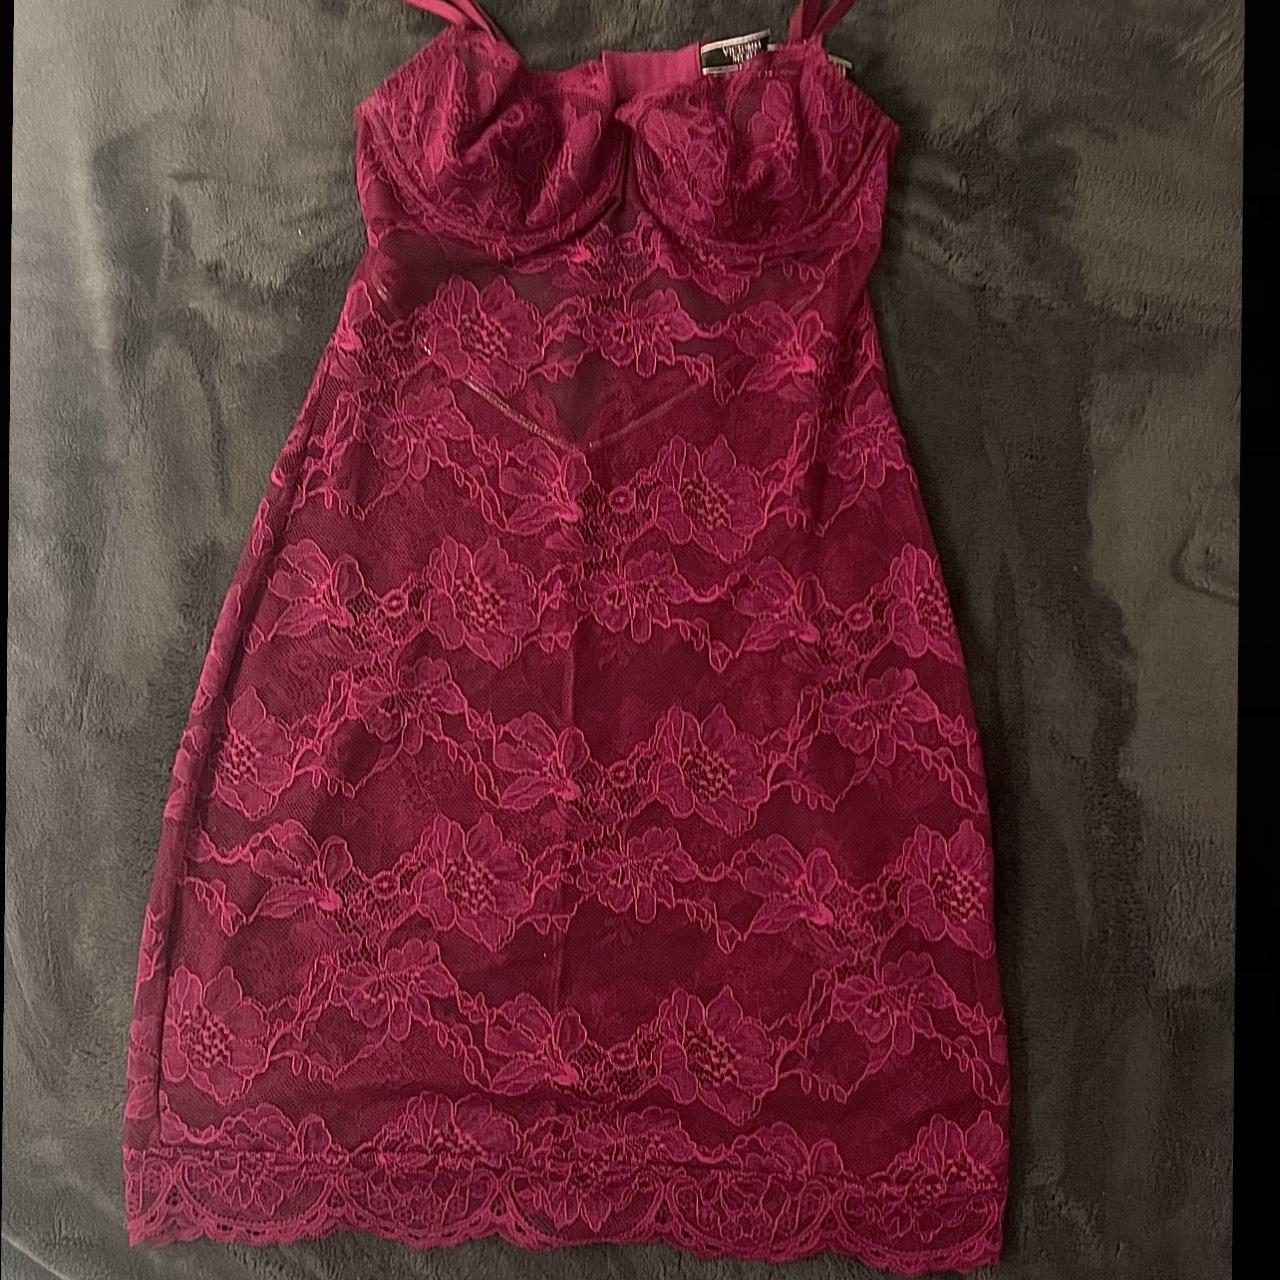 Victoria’s Secret Full Lace Slip dress in burgundy... - Depop